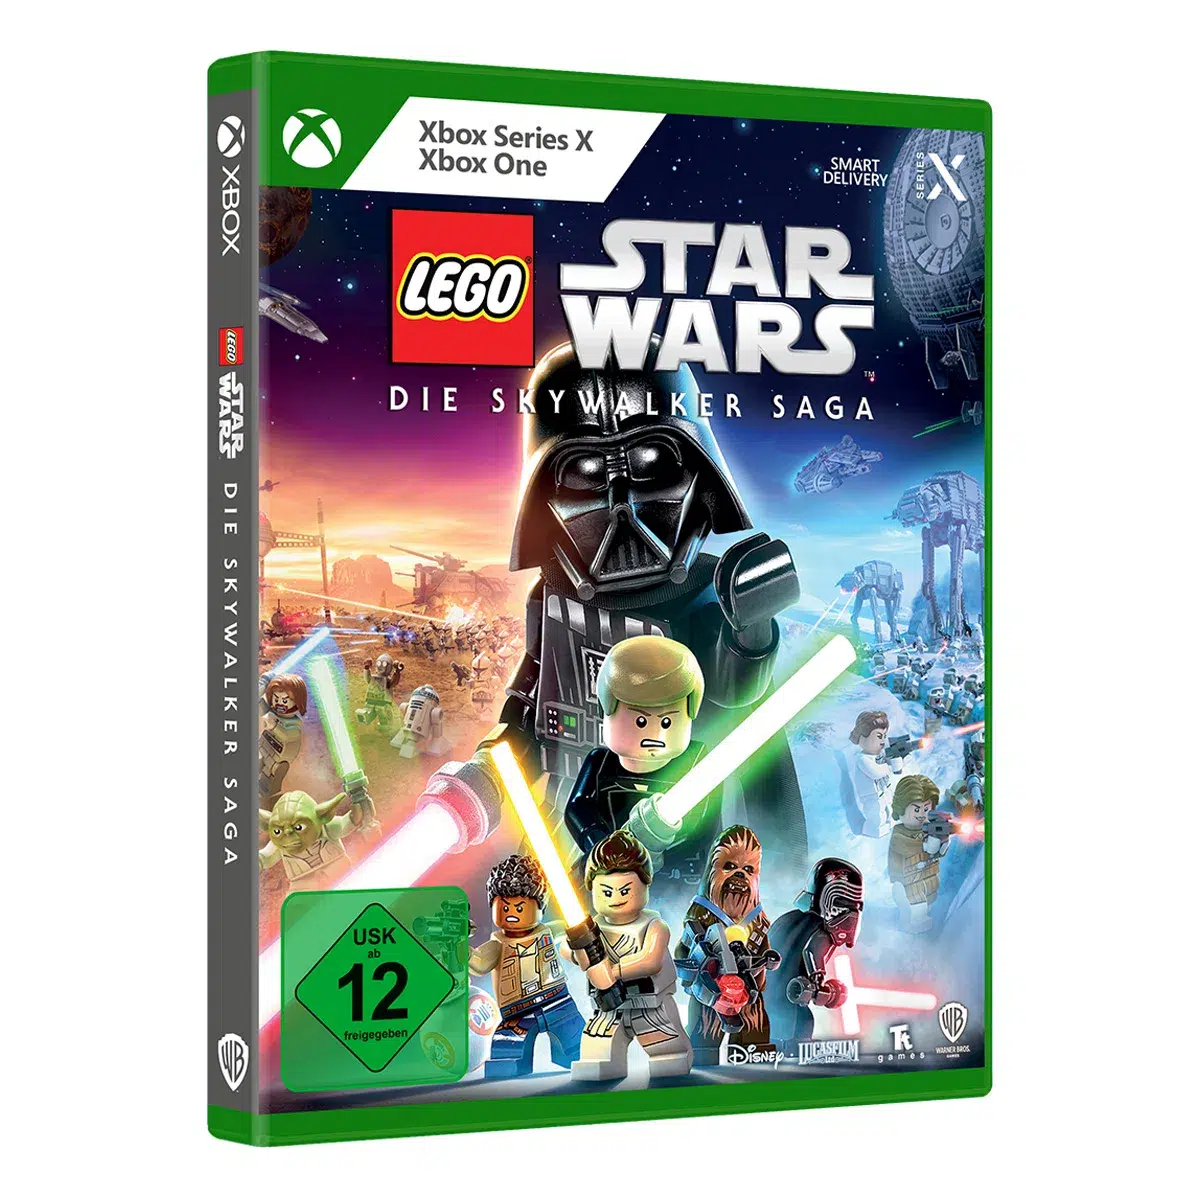 LEGO STAR WARS Die Skywalker Saga (Xbox One / Xbox Series X) Image 6